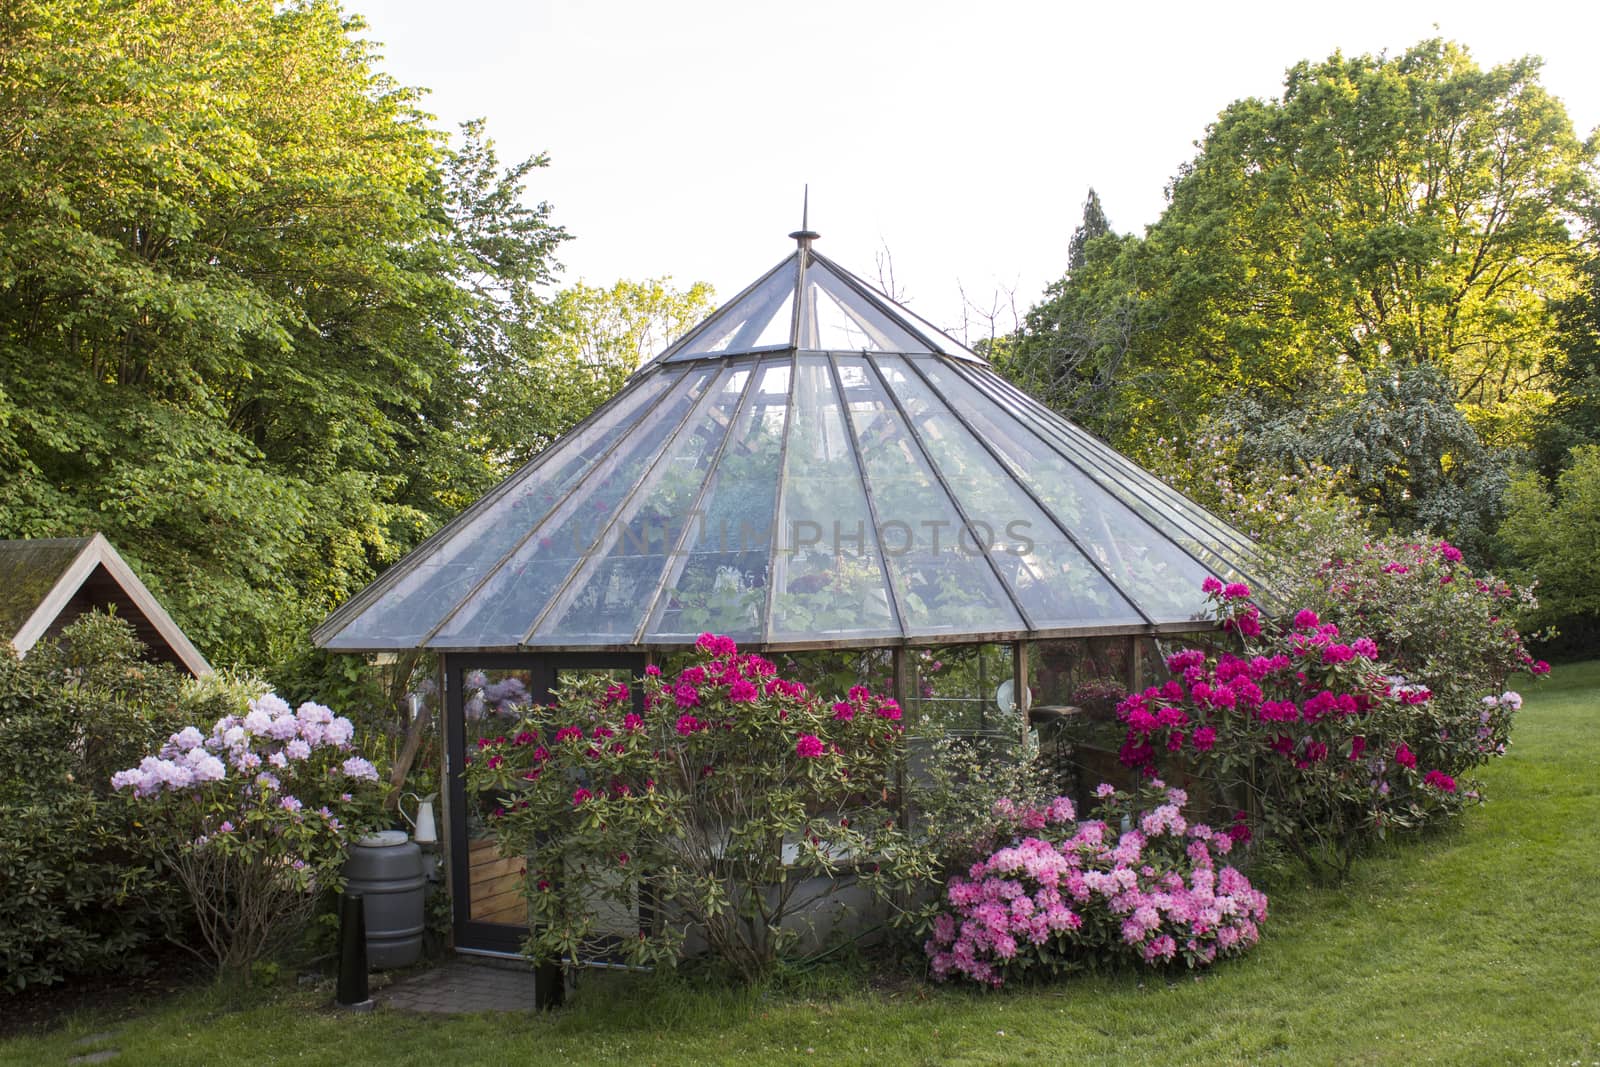 Home build greenhouse in a garden by bluiten